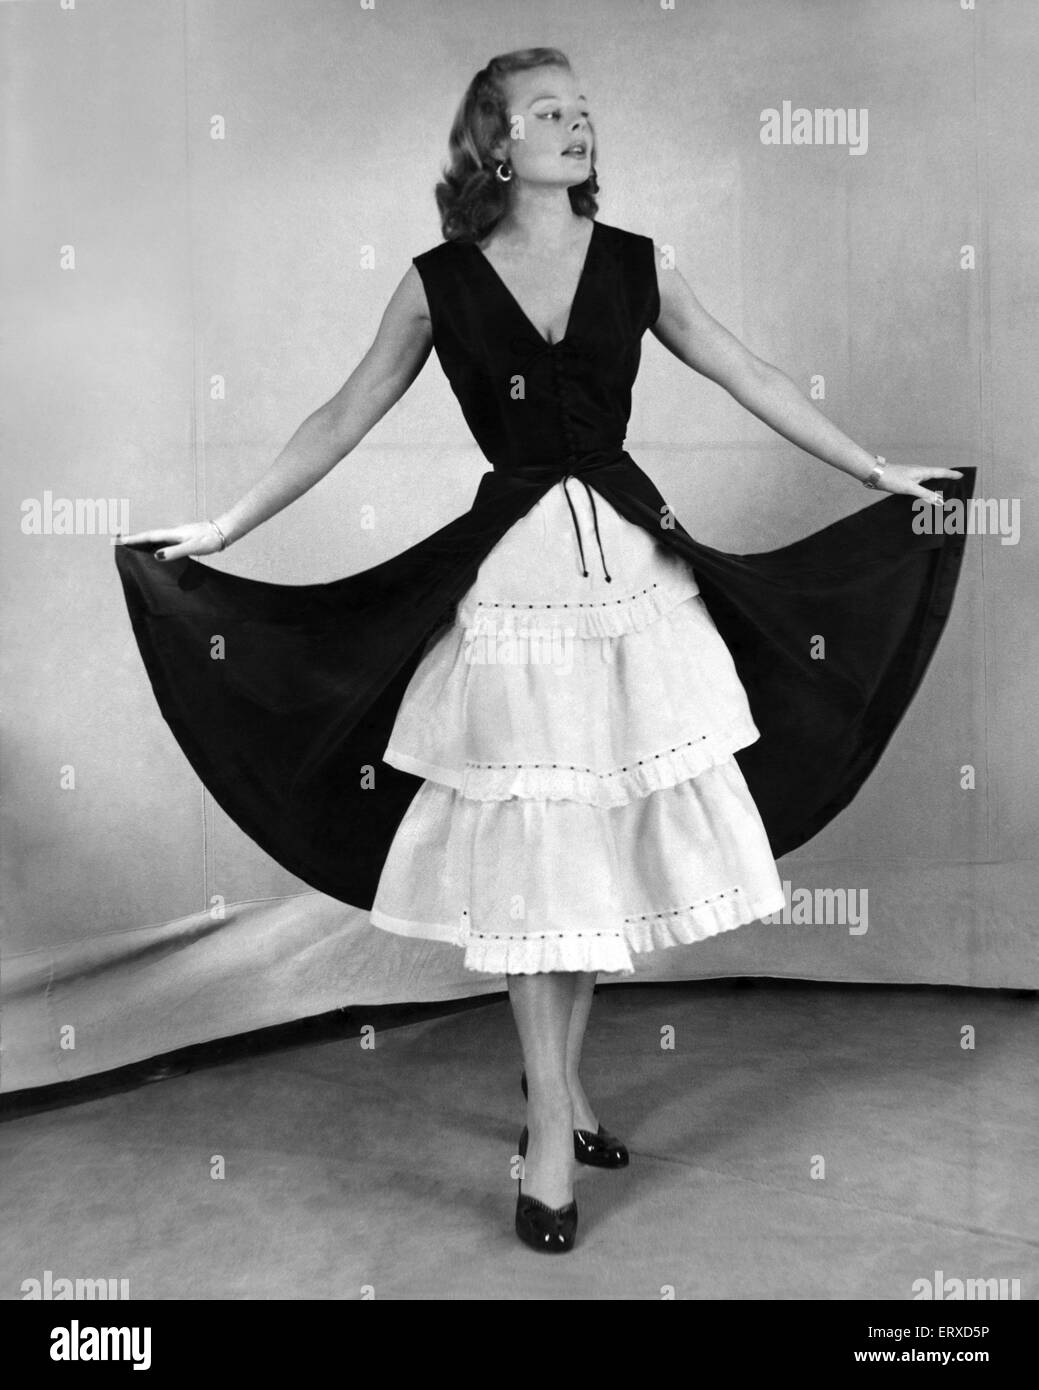 https://c8.alamy.com/comp/ERXD5P/a-model-in-a-petticoat-dress-december-1951-ERXD5P.jpg